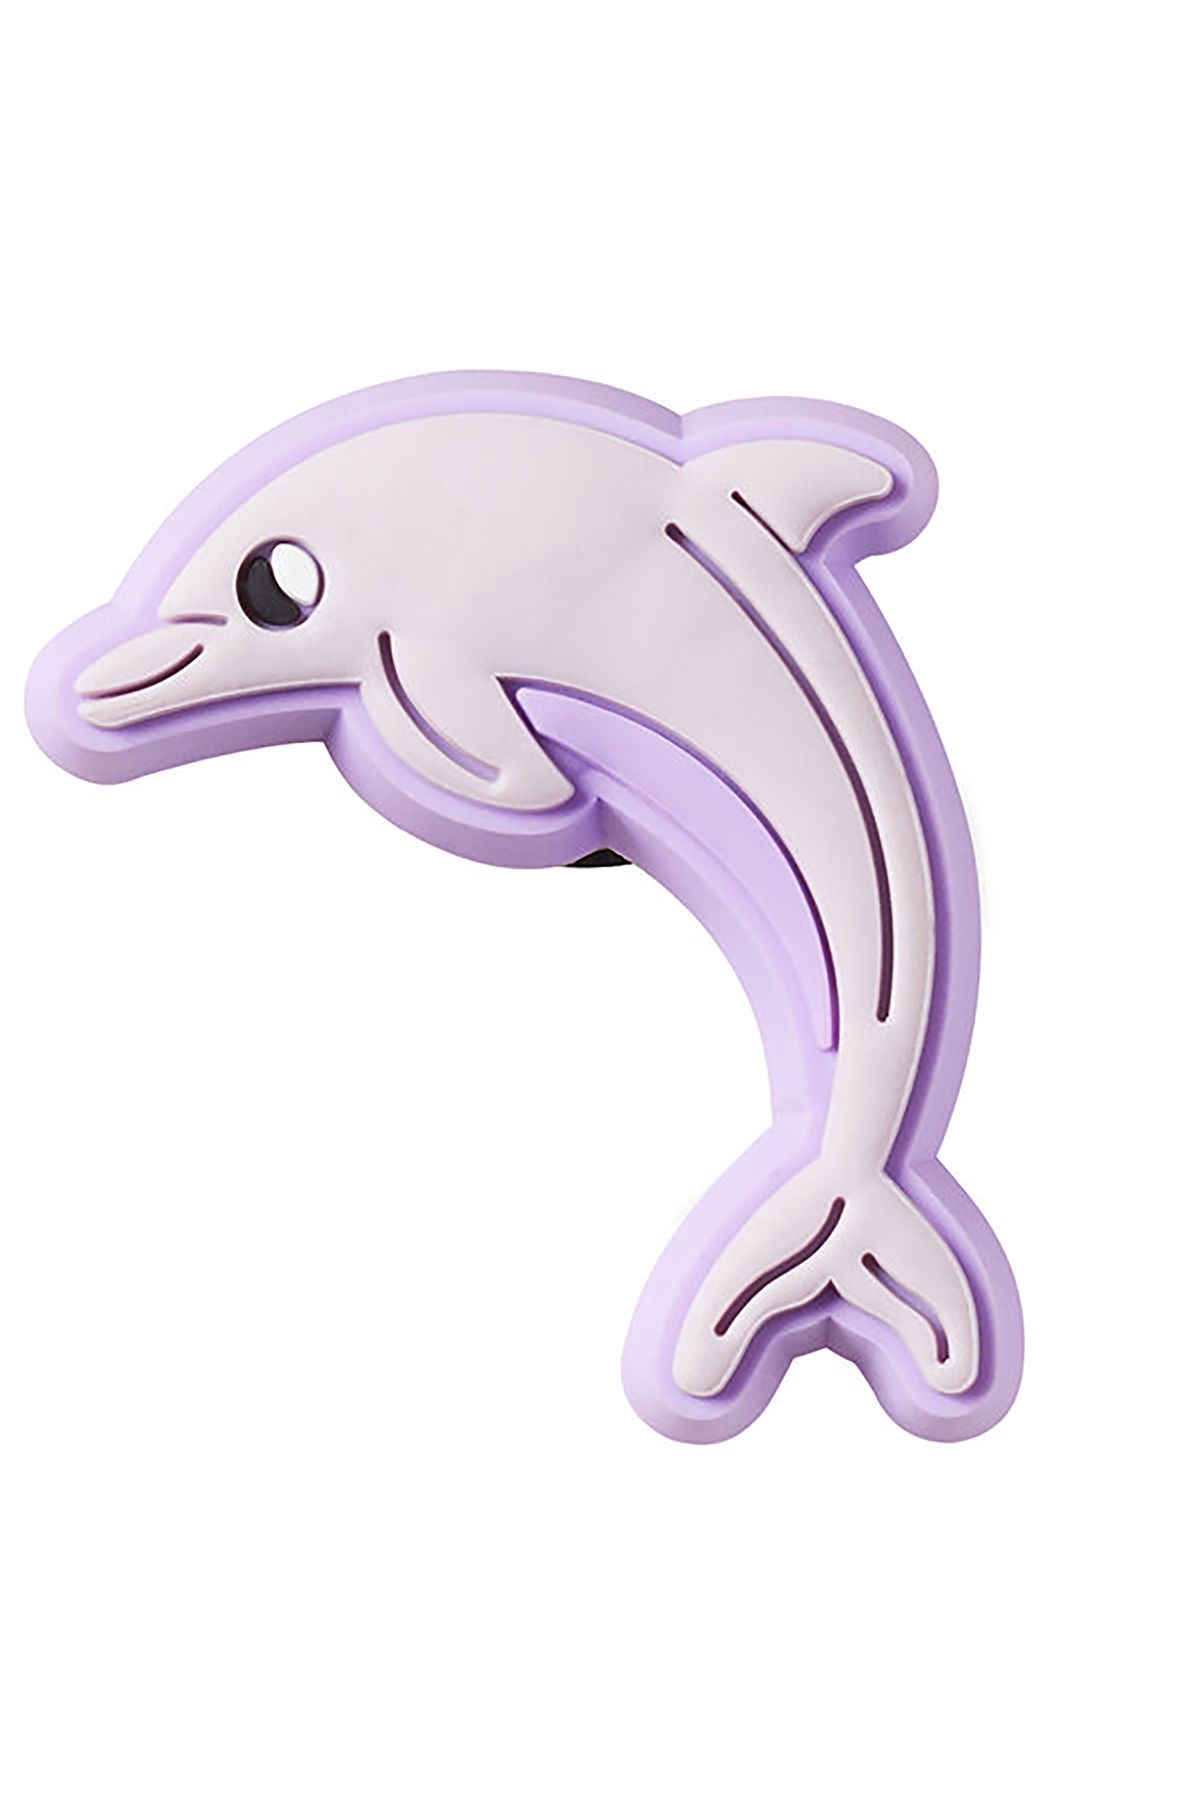 Crocs Purple Dolphin Terlik Süsü (10011742-1)